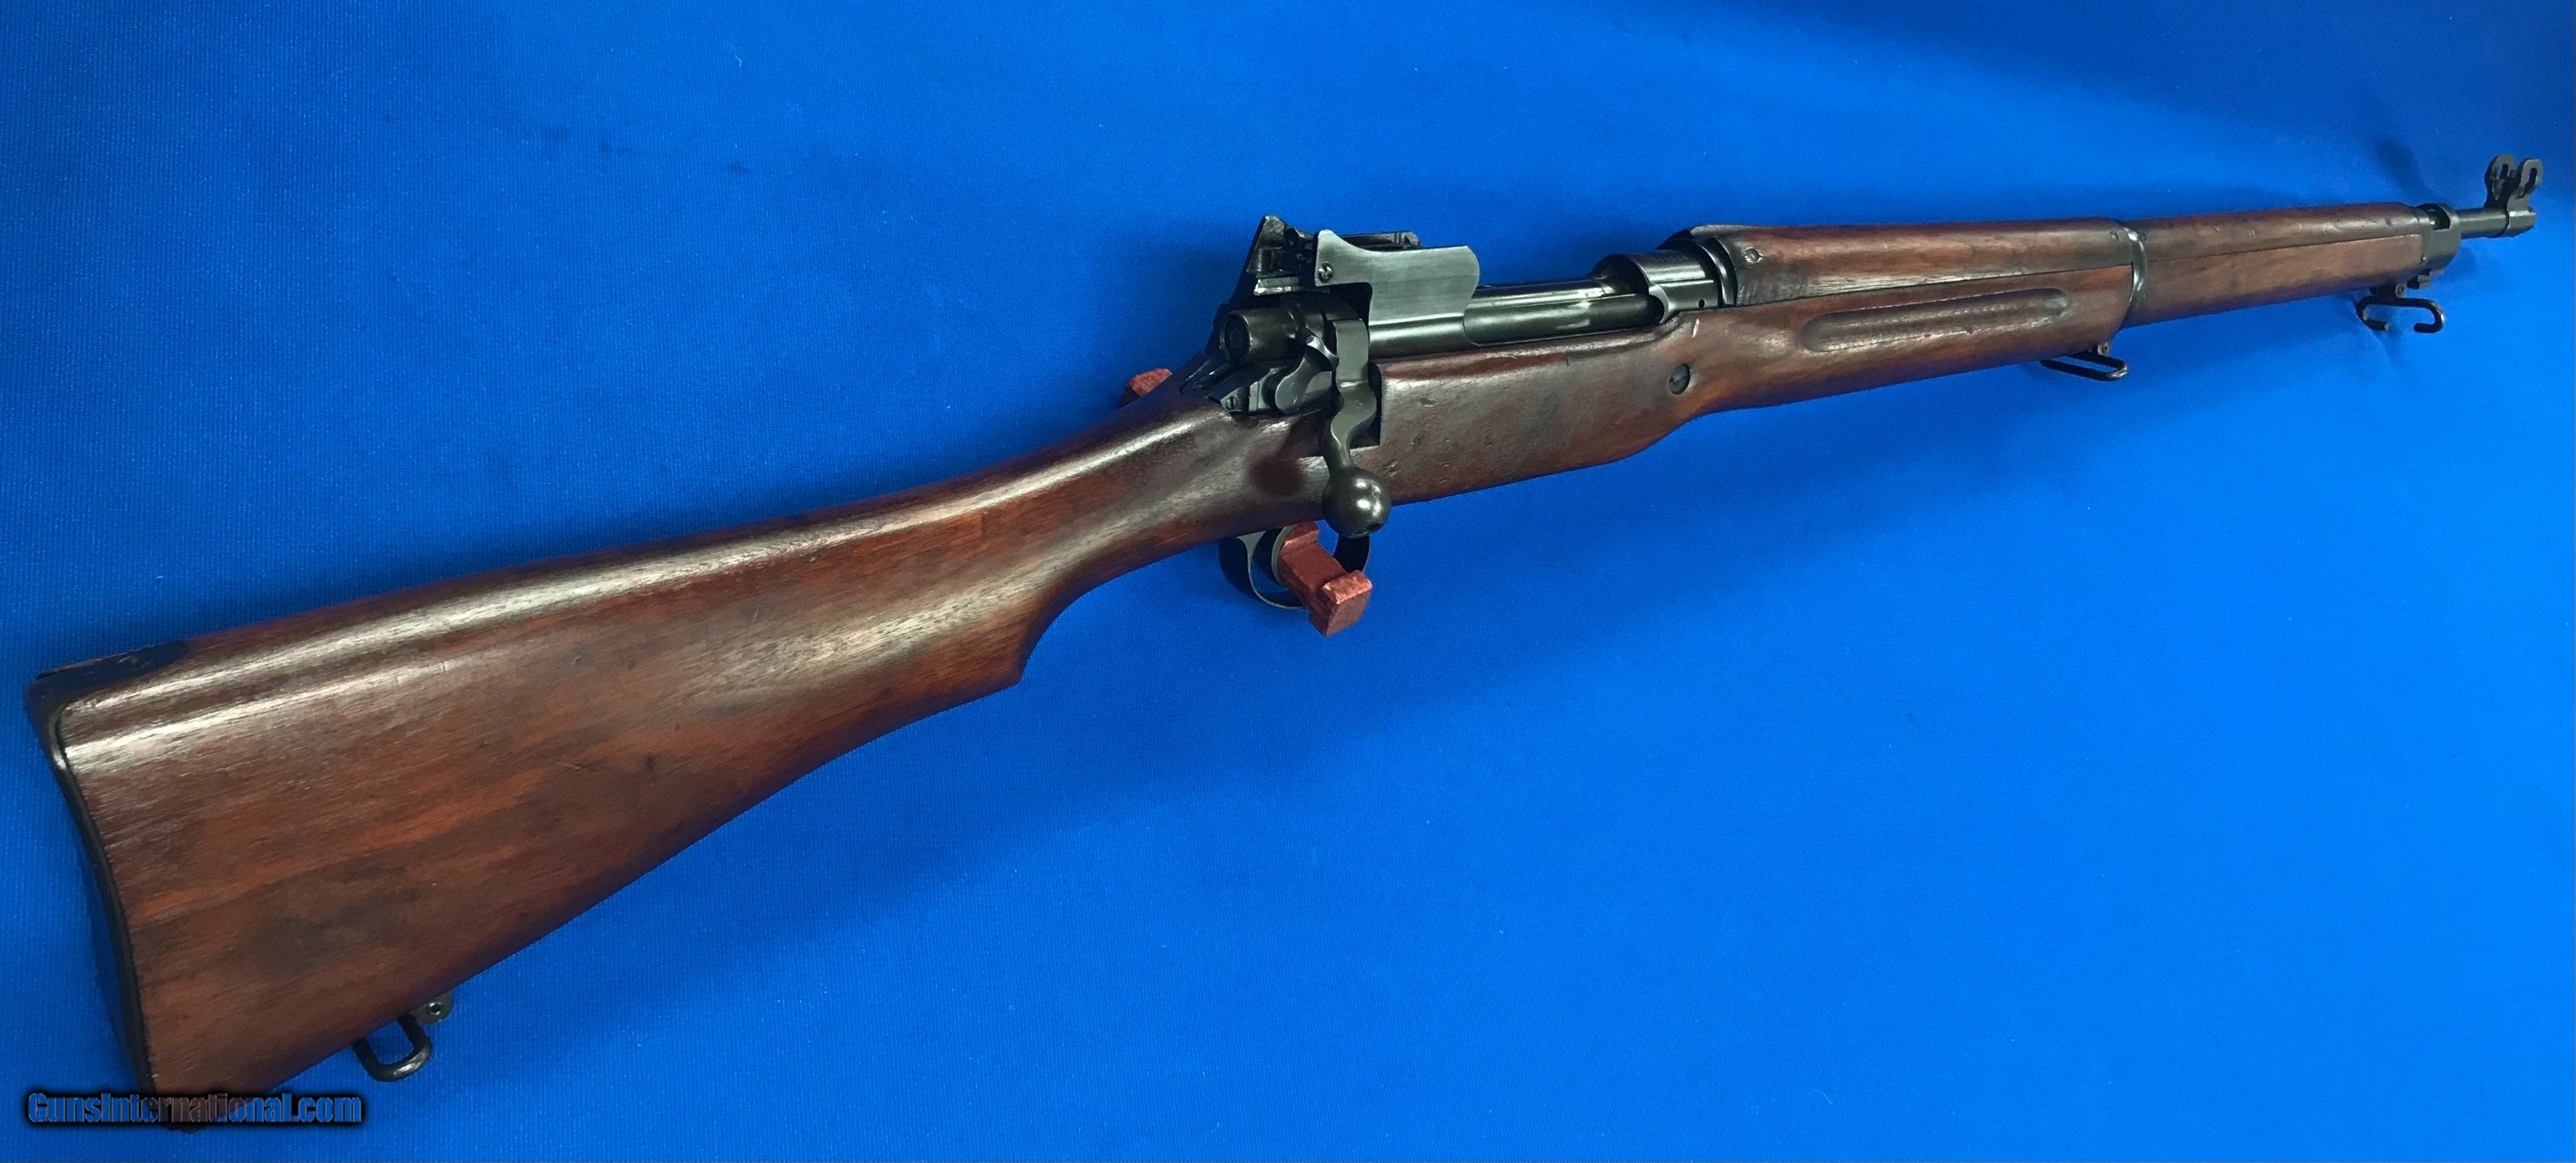 Model 1917 Enfield Rifle